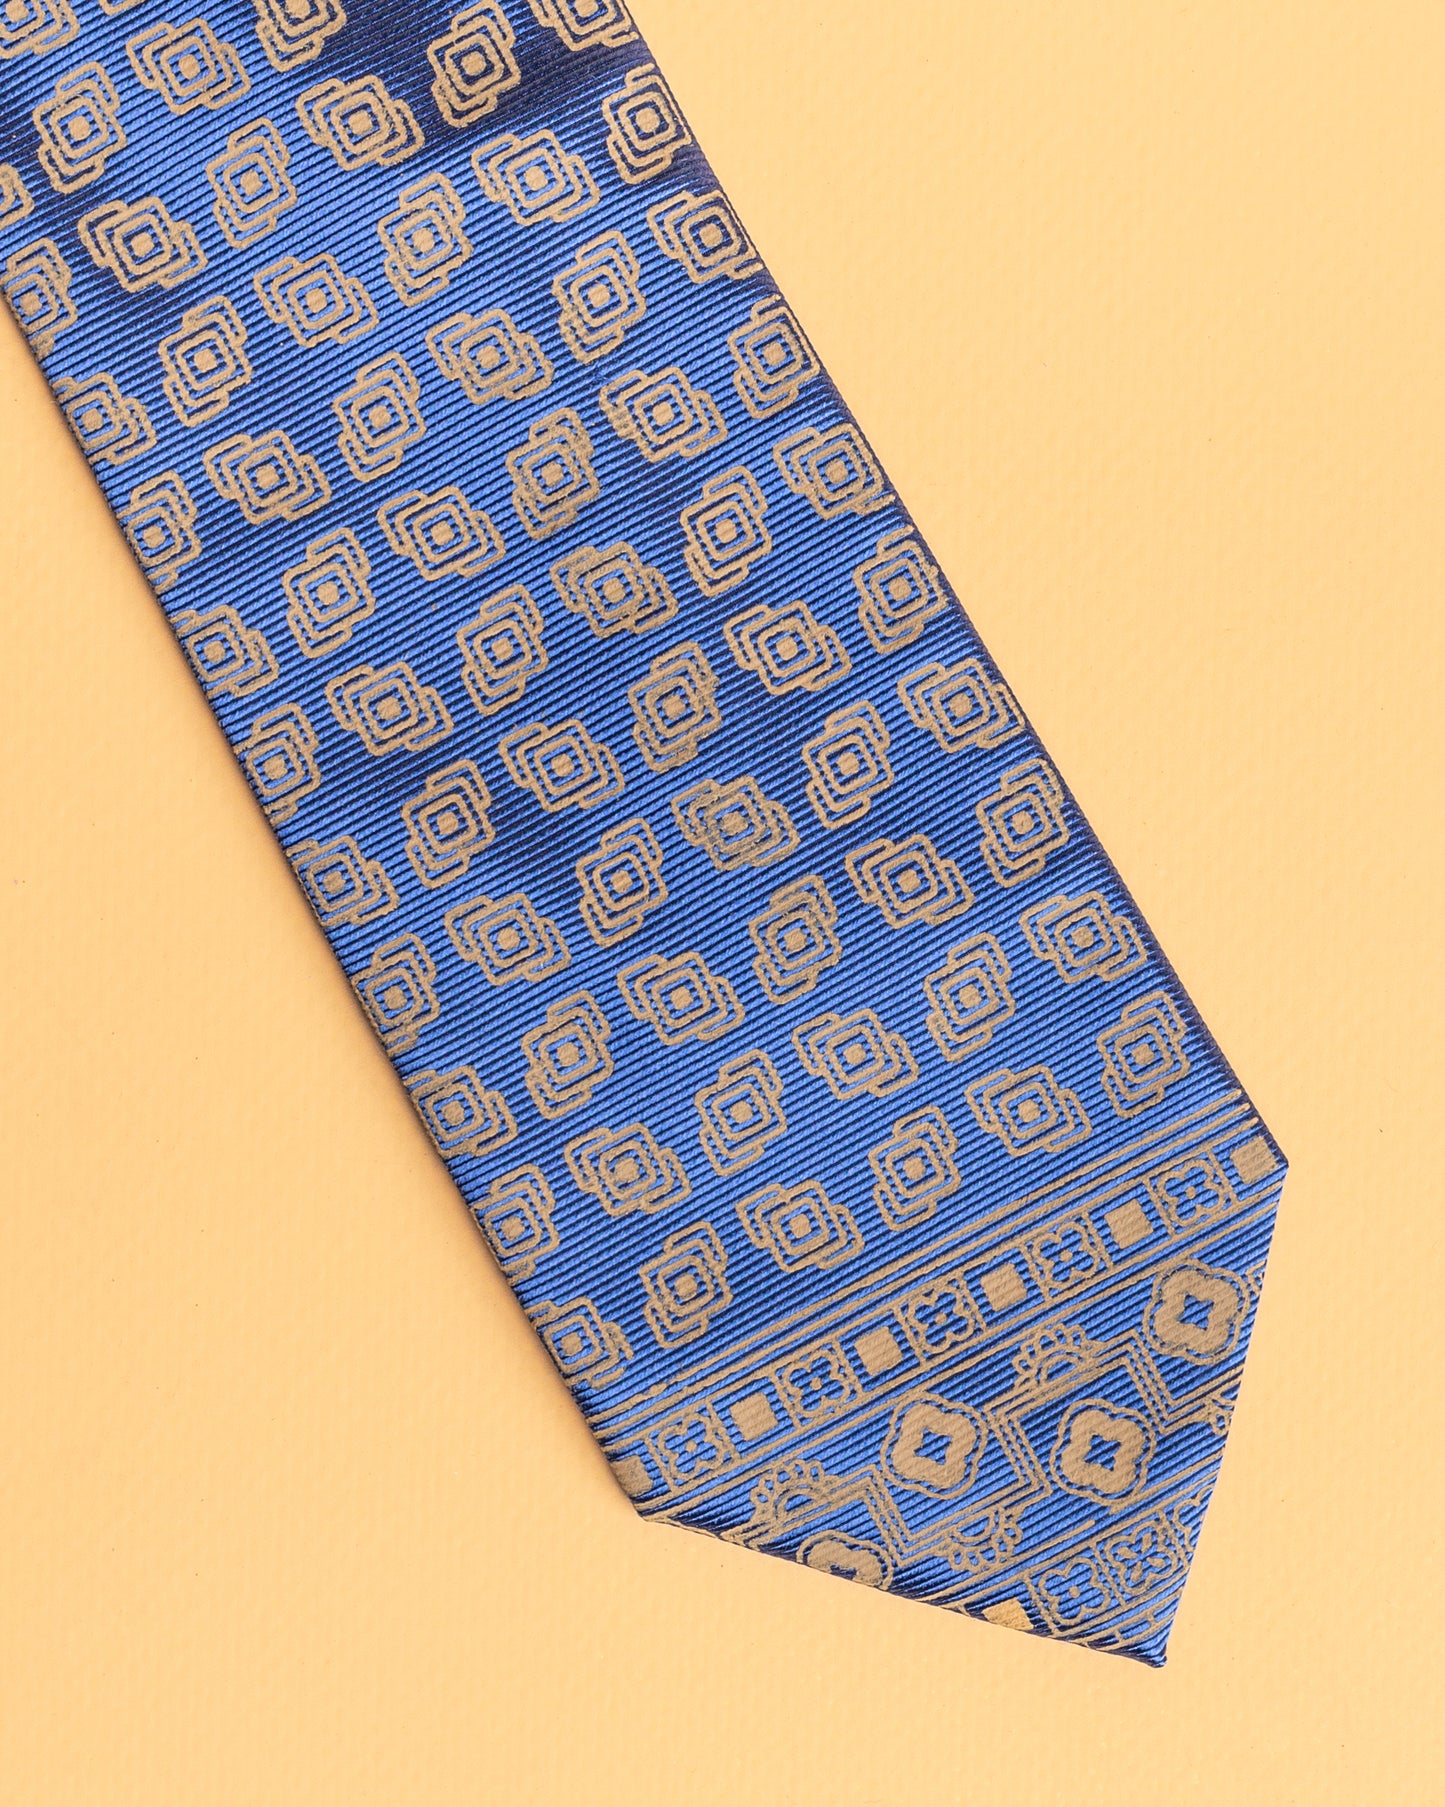 Cravatta in Seta Azzurra stampata a mano